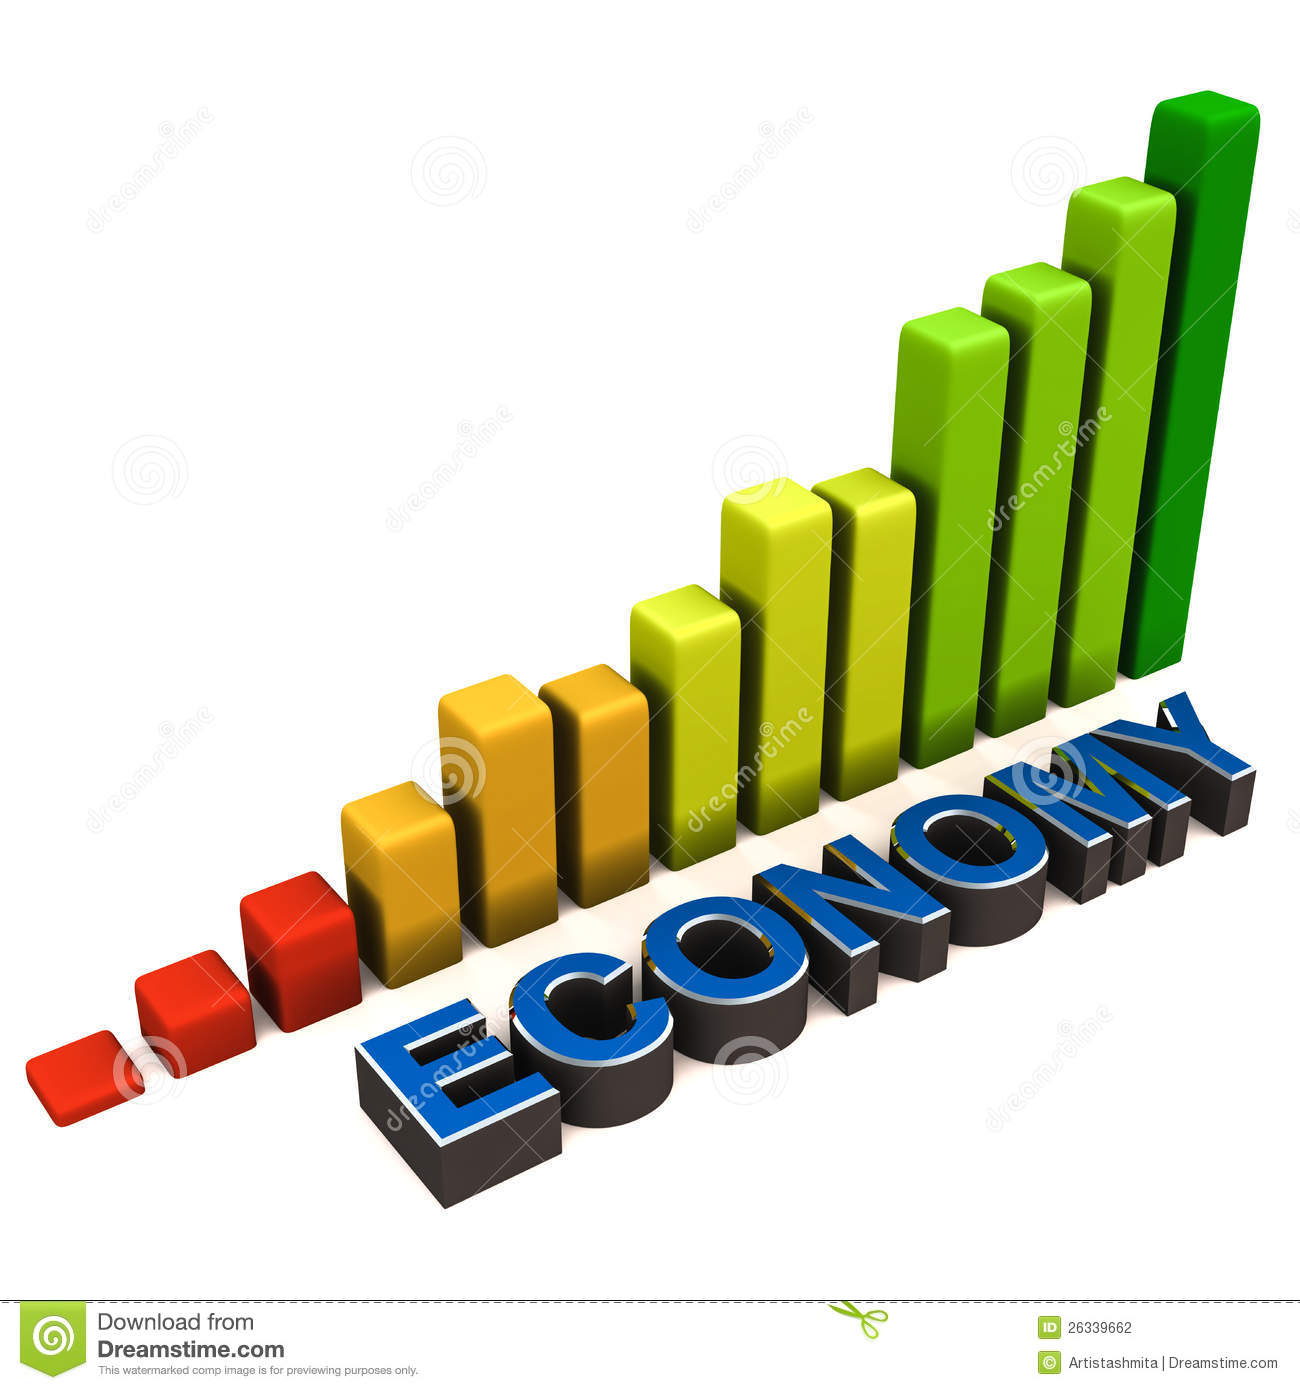 Economy clipart economy graph. Economics free download best